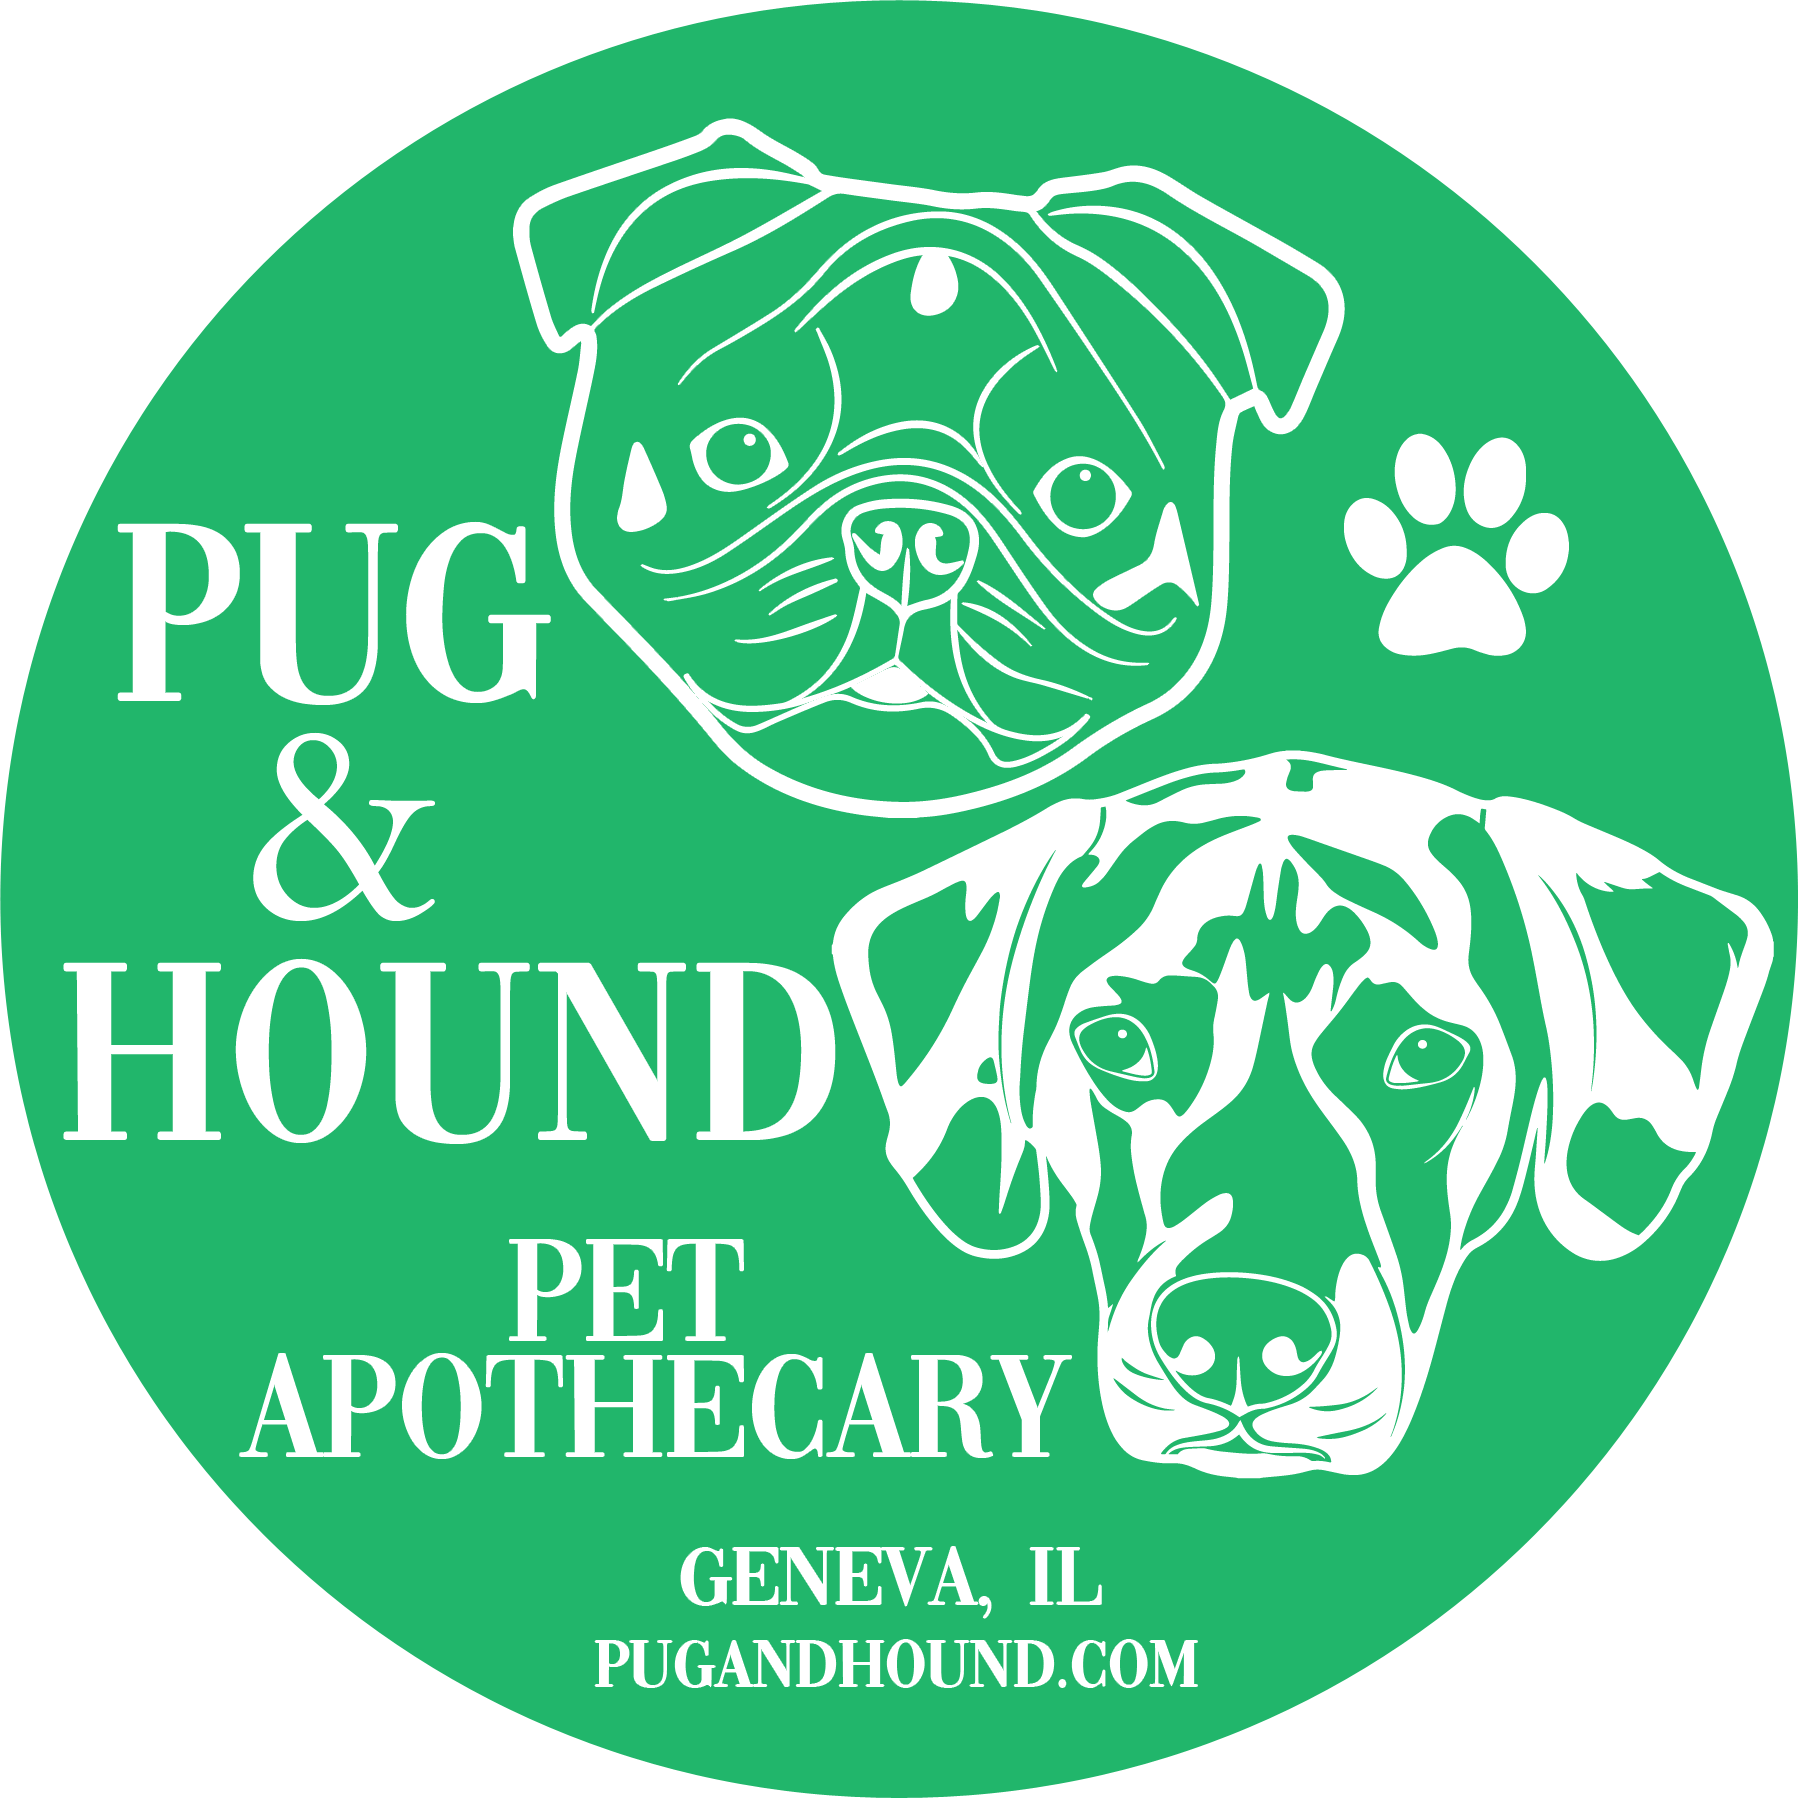 Pug & Hound Pet Apothecary